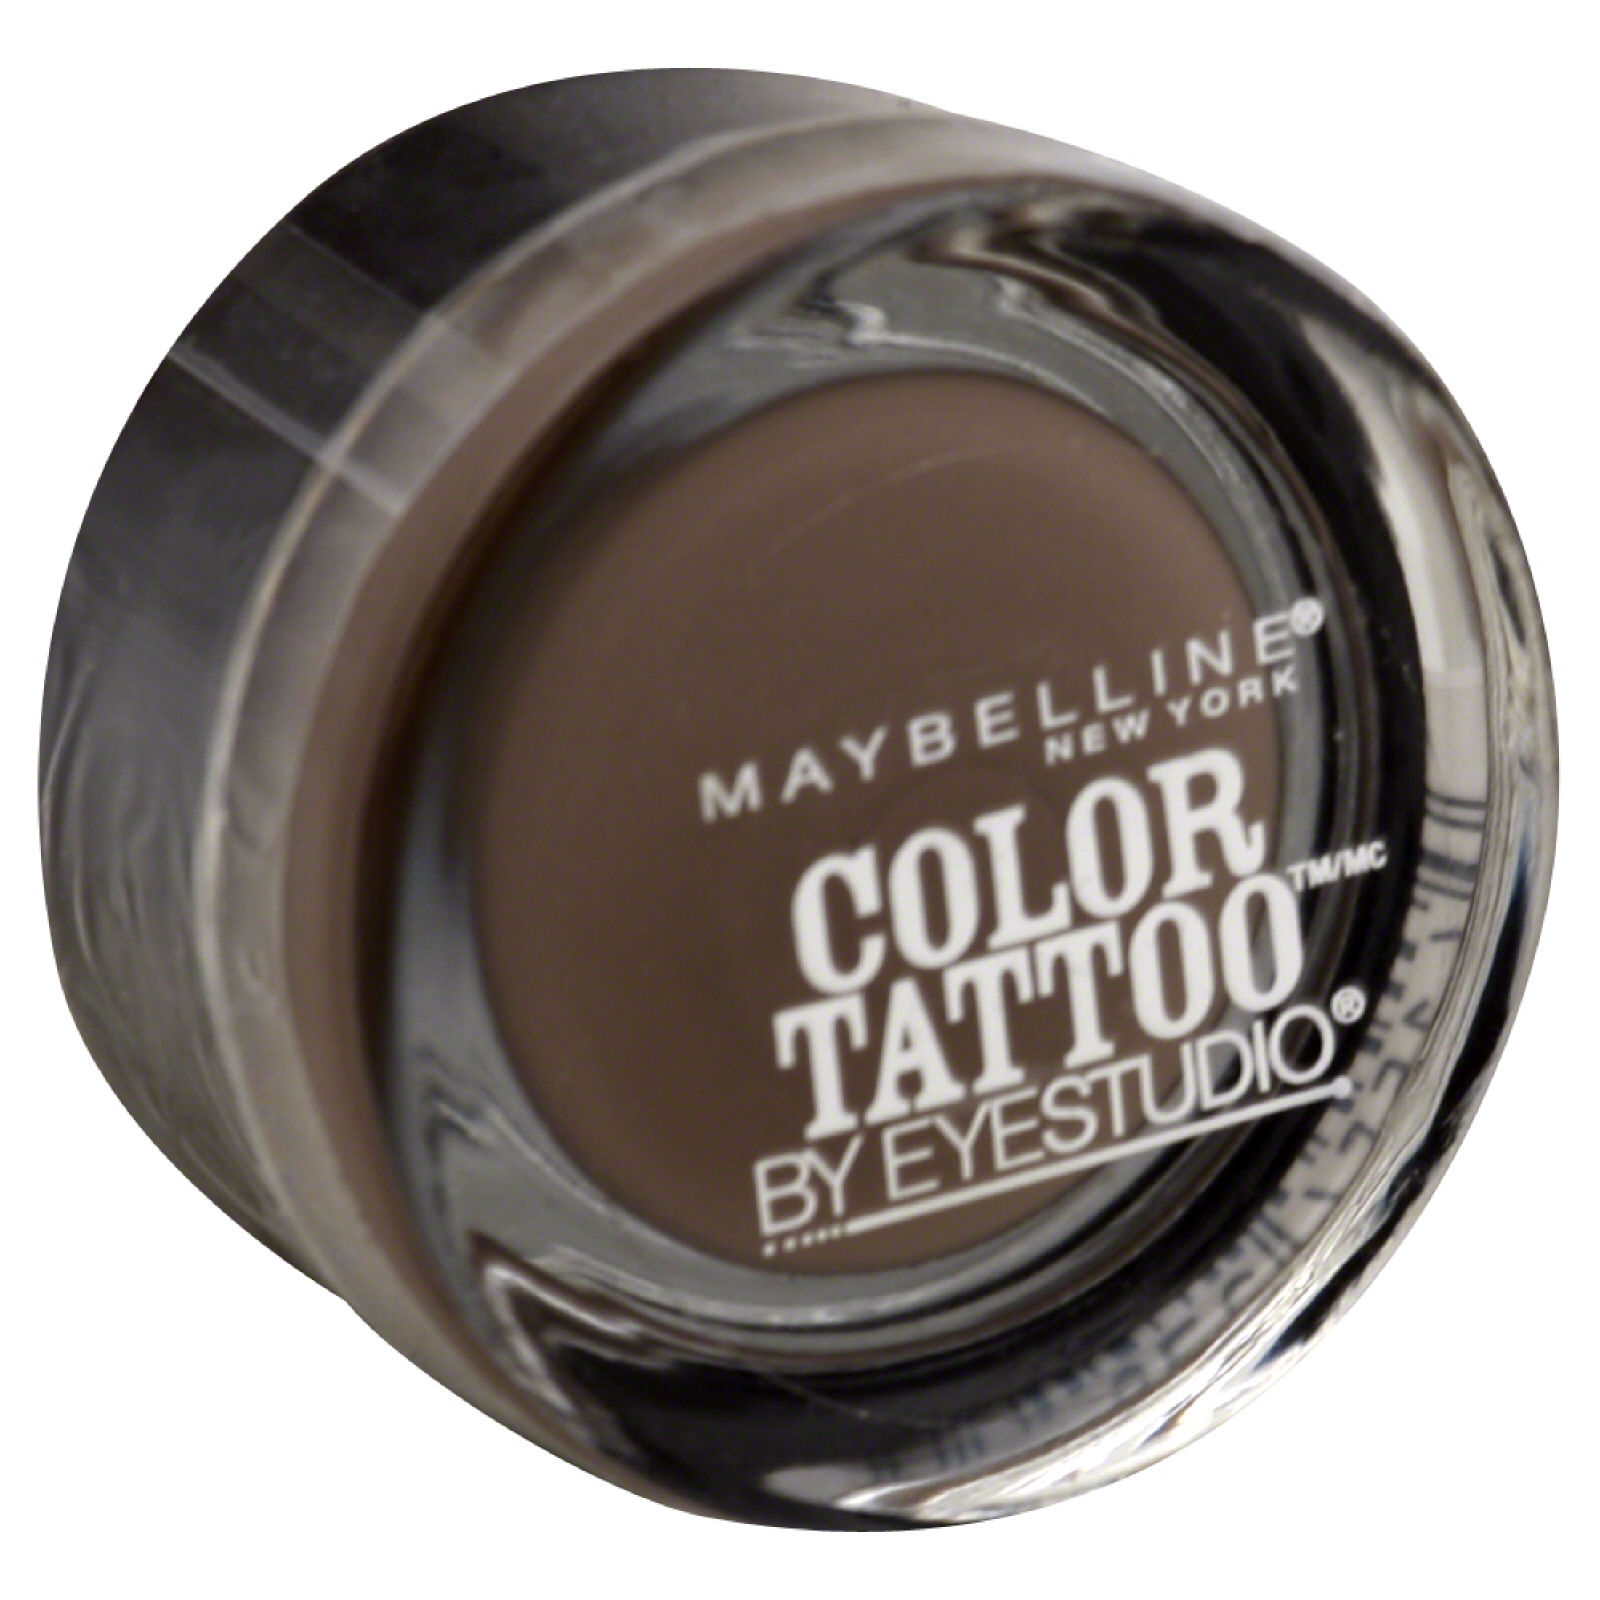 Maybelline New York Eye Studio Color Tattoo